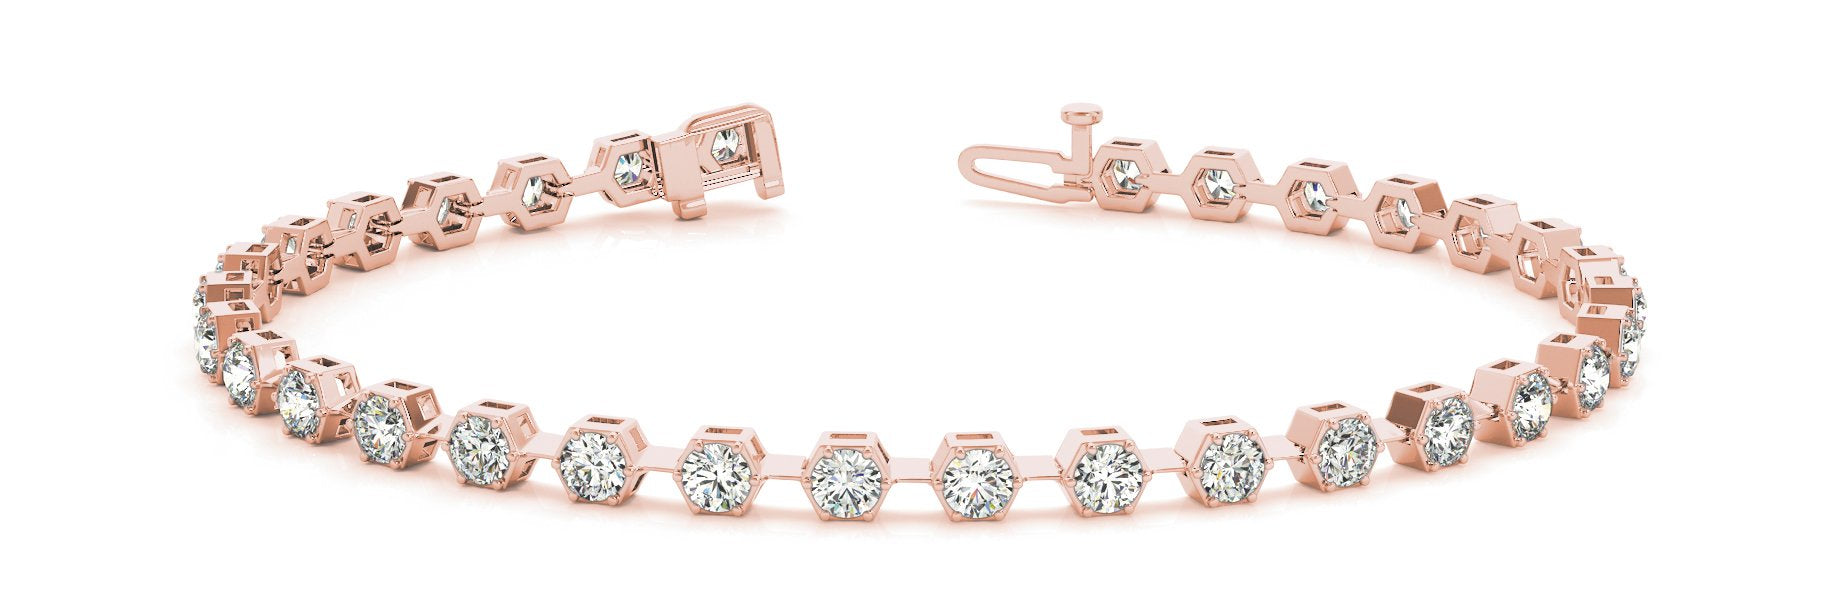 Fancy Diamond Bracelet Ladies 1.52ct tw - 14kt Rose Gold